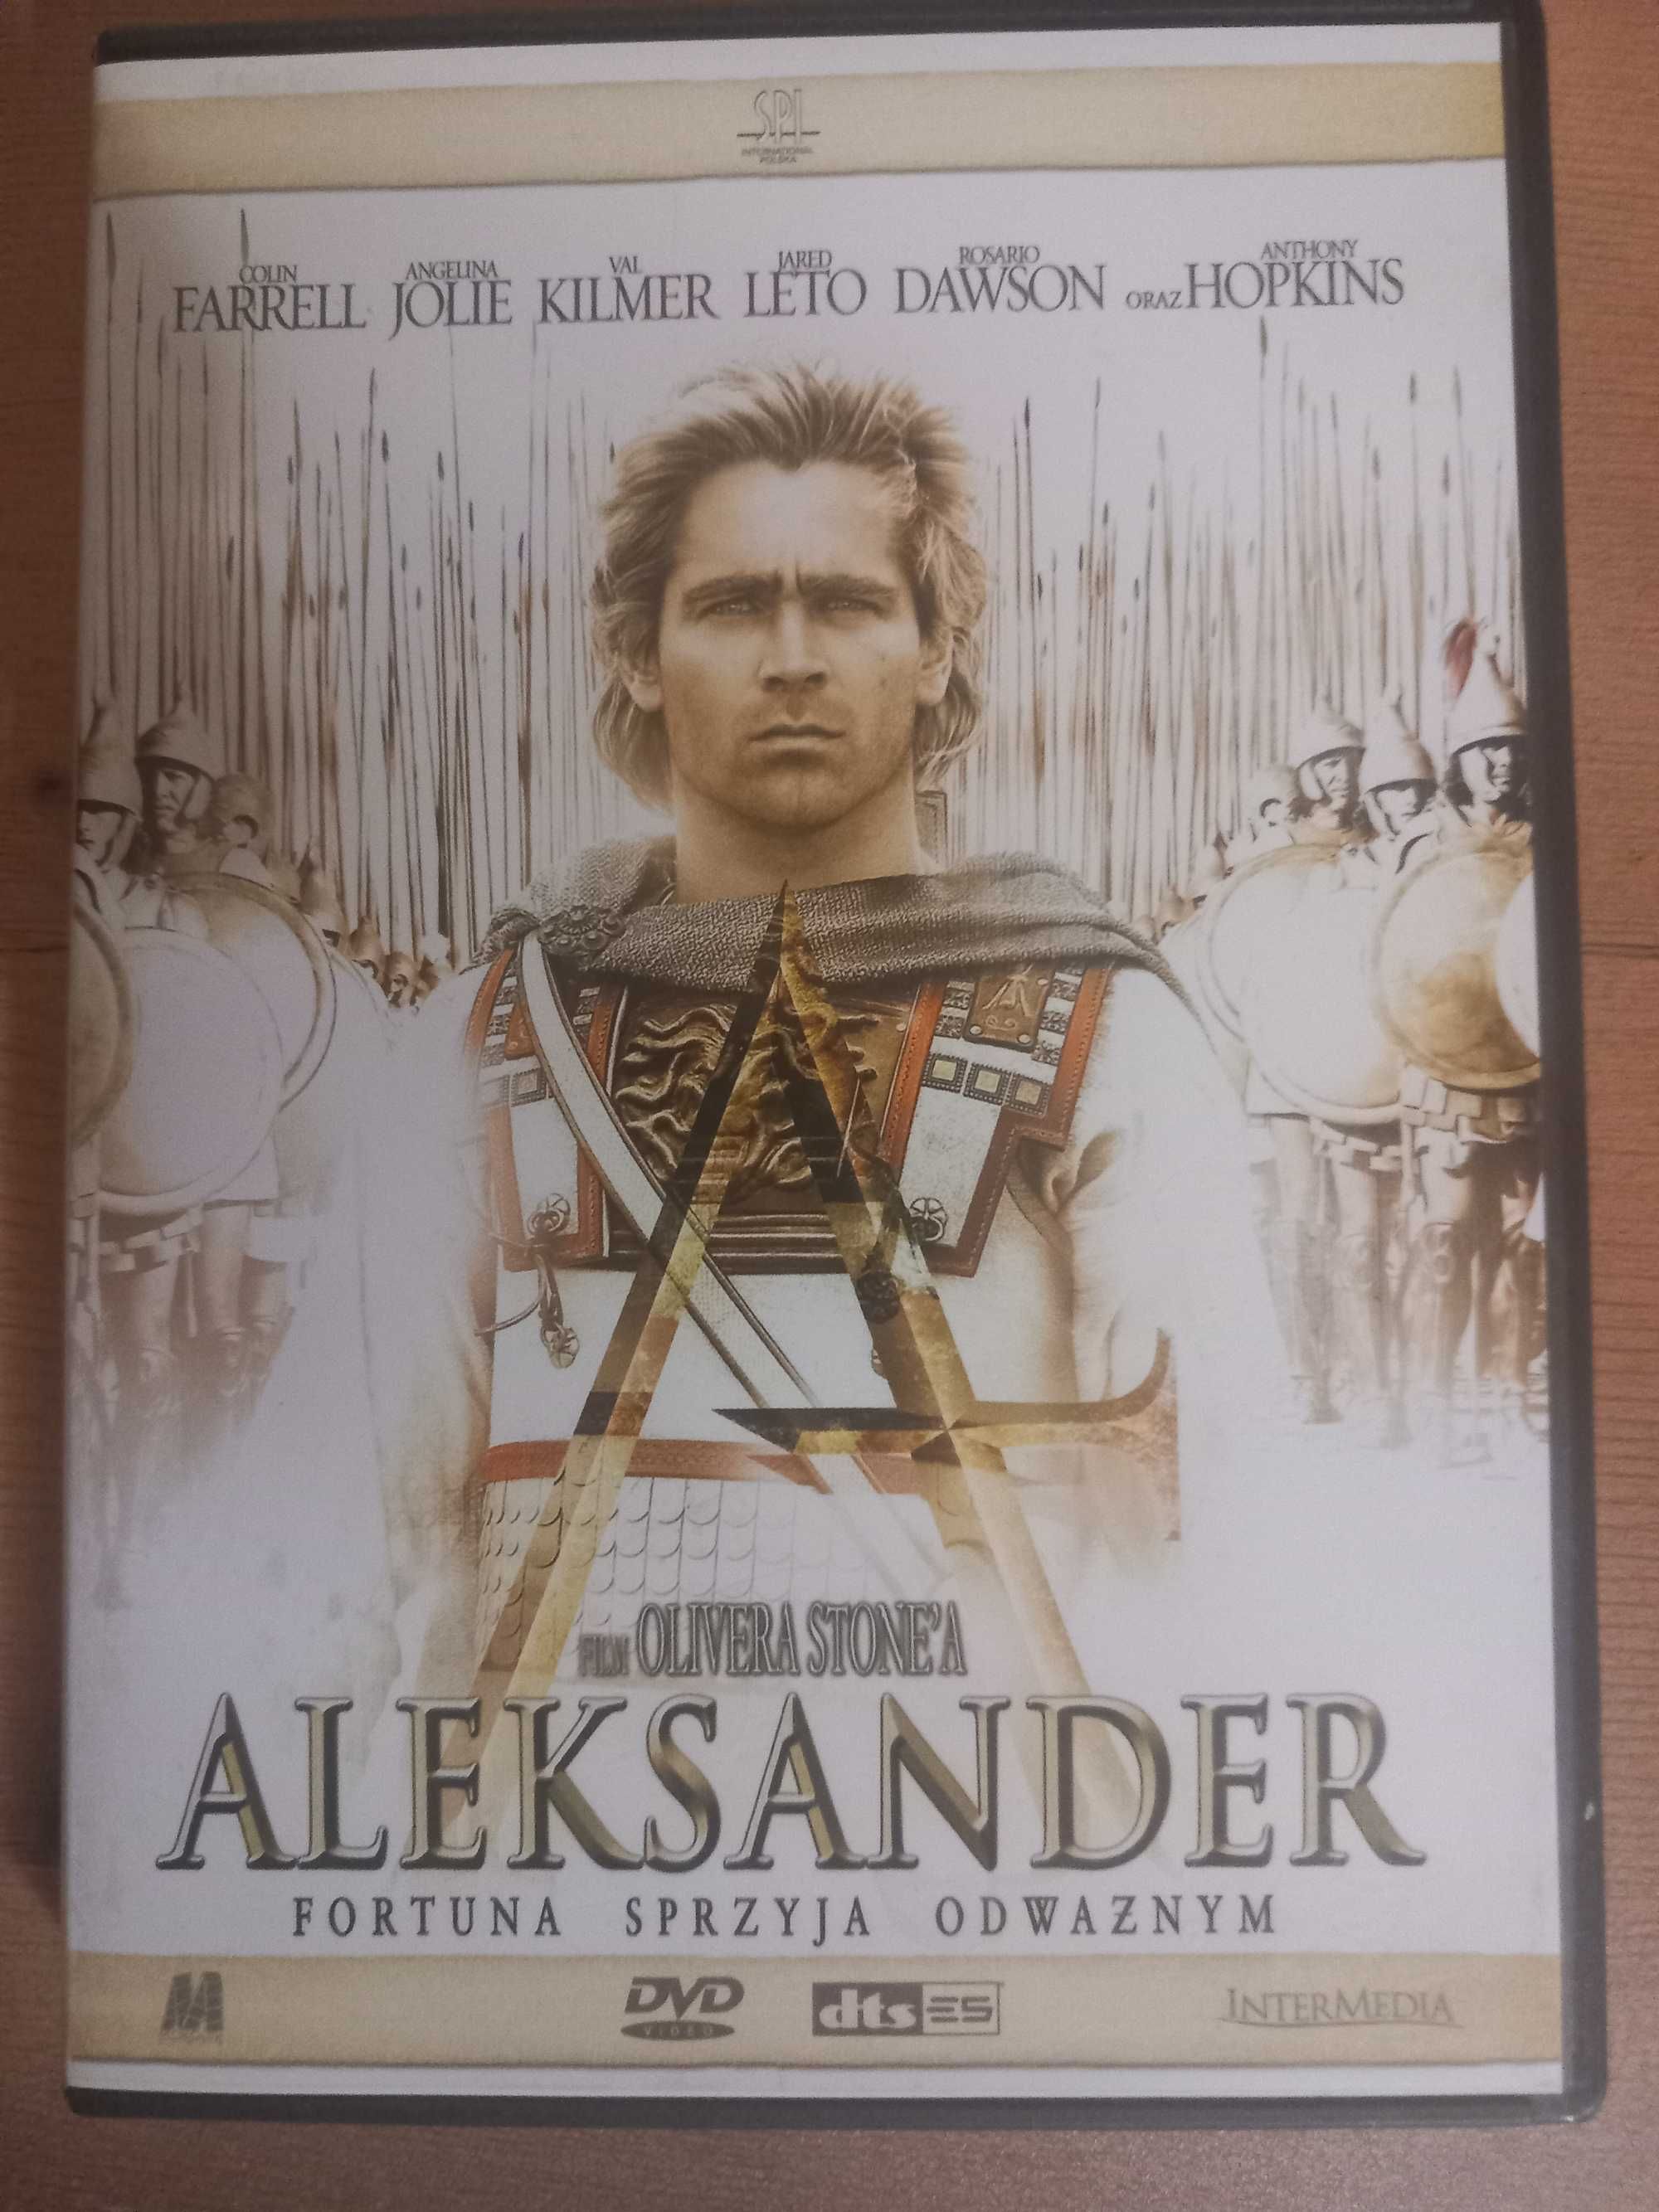 Aleksander film dvd